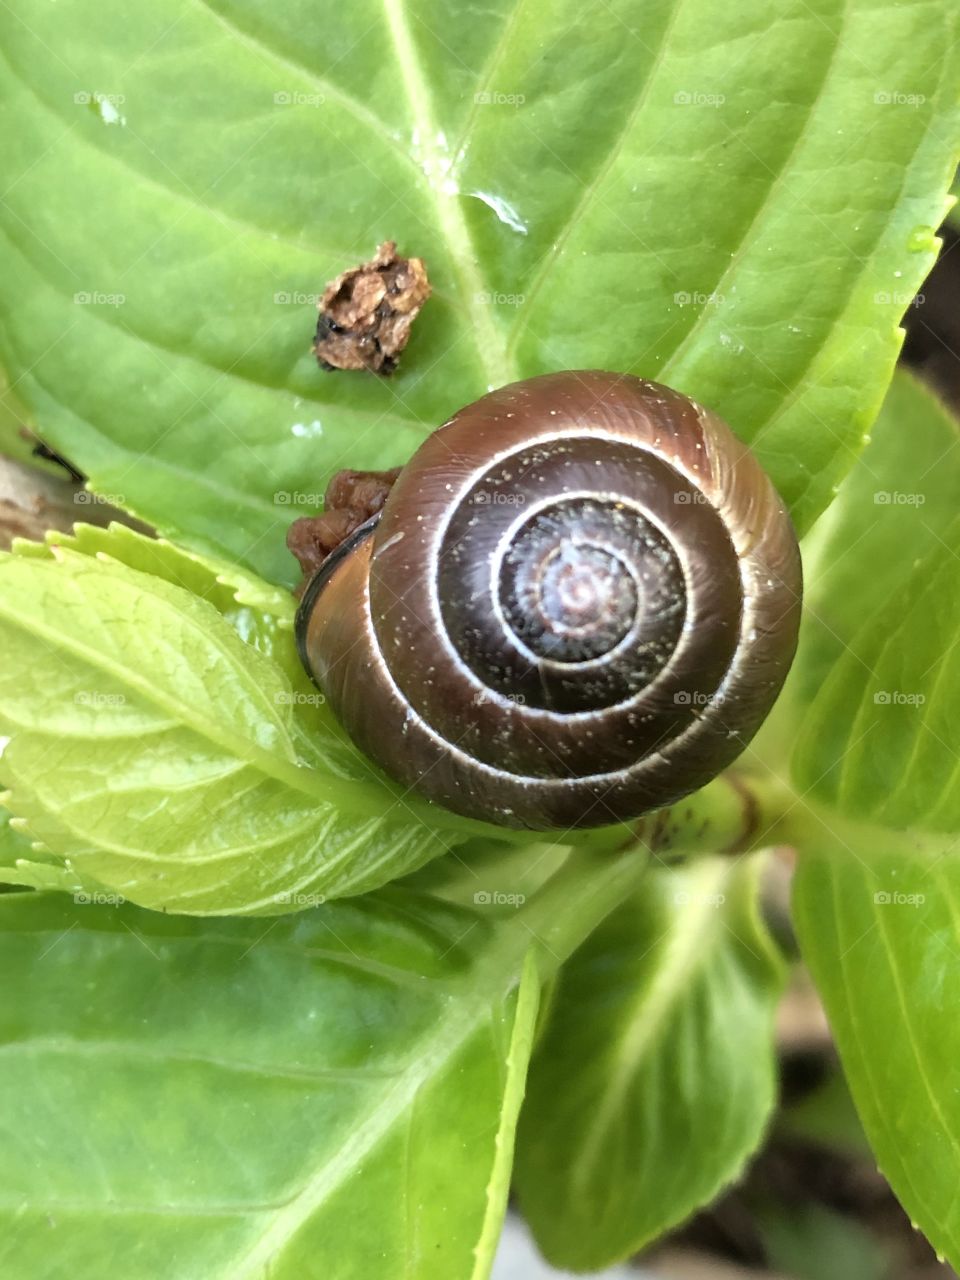 Snail in it’s dark shell on a bright green leaf 